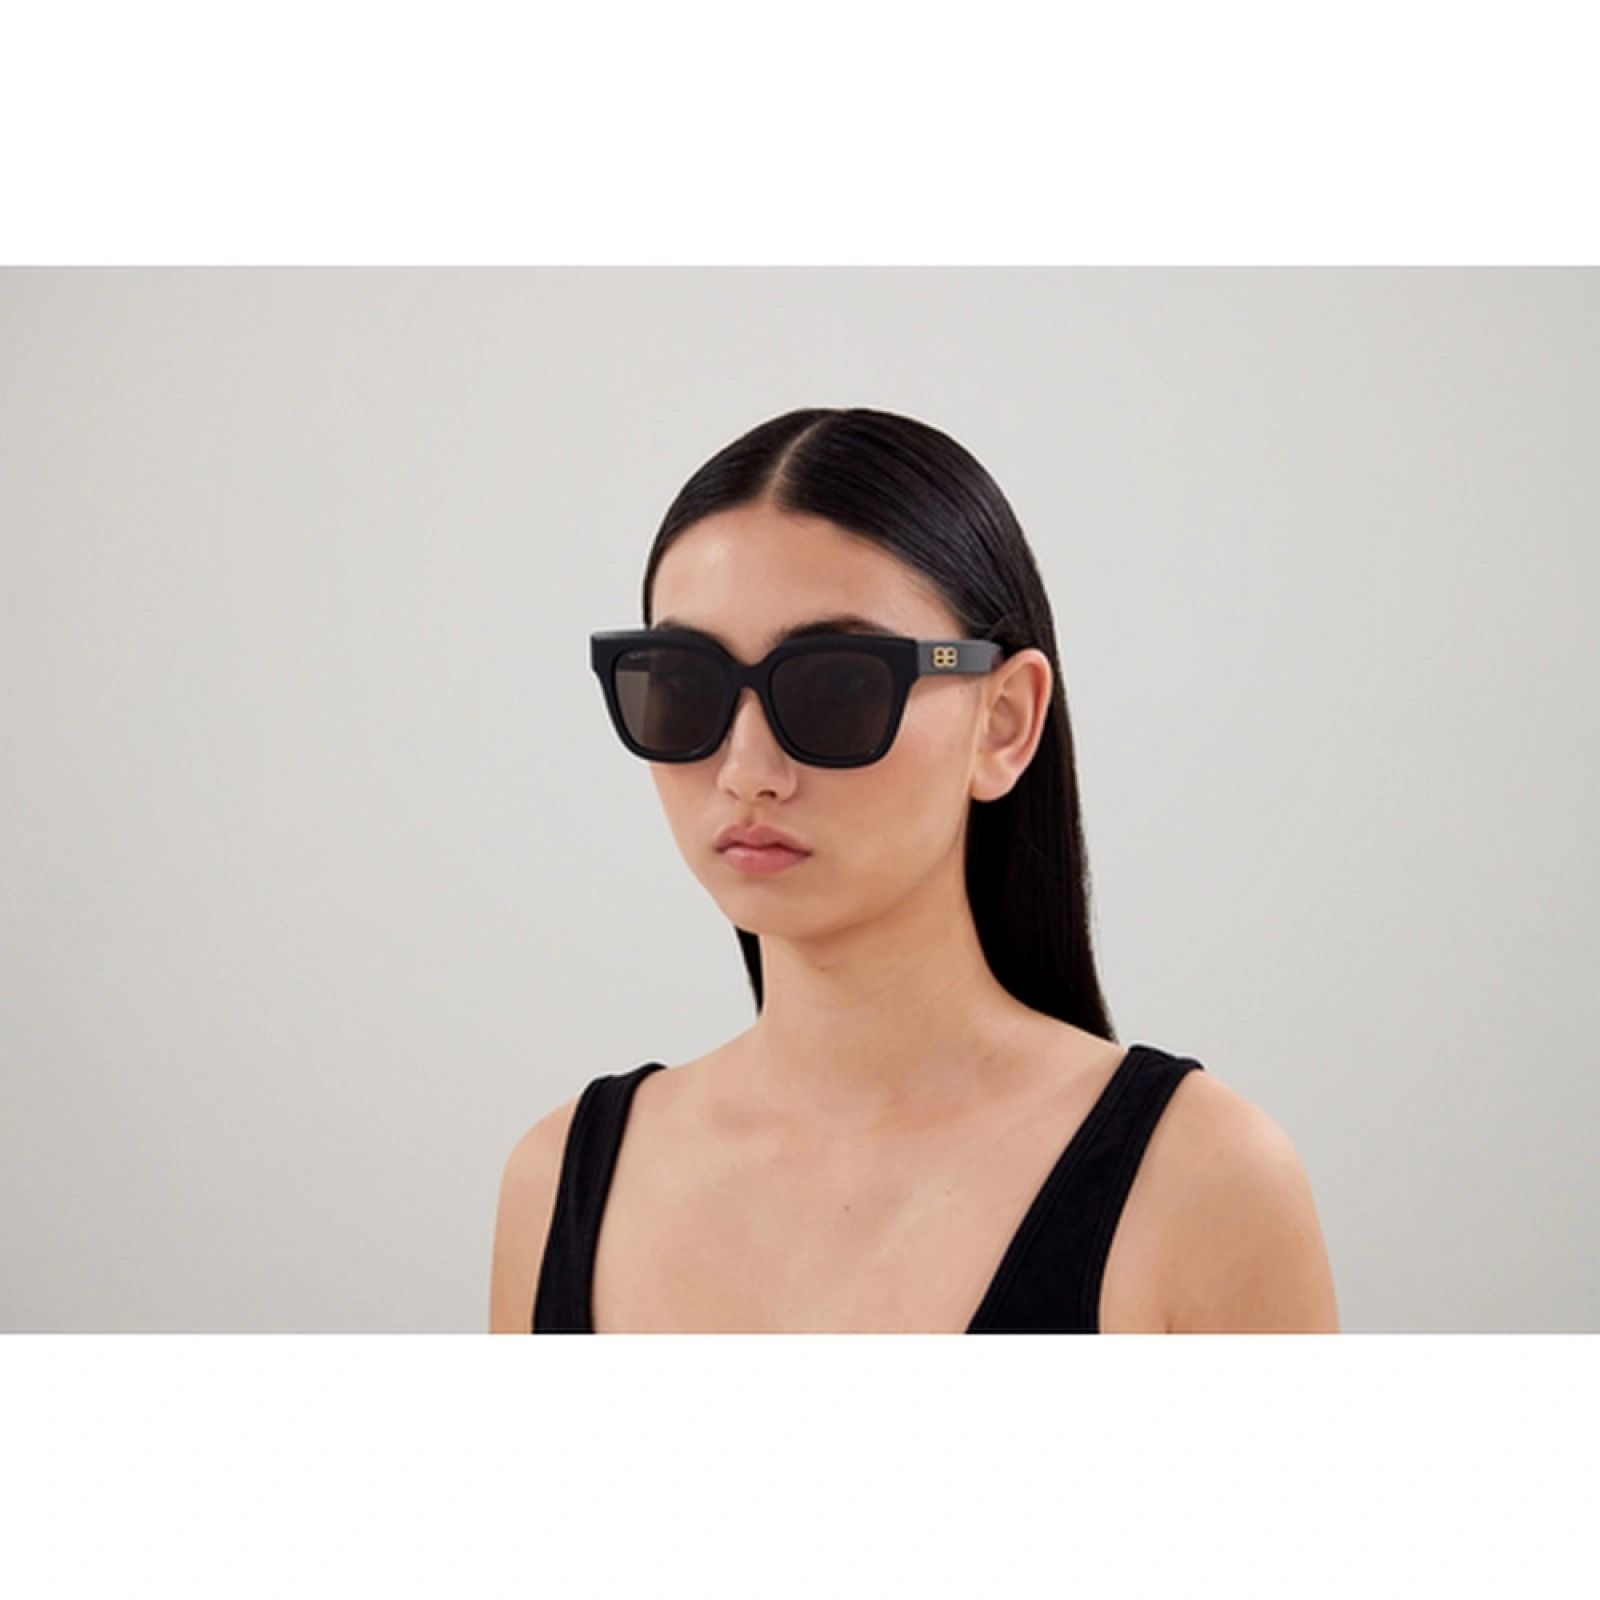 Balenciaga  Cut Square Sunglasses  Black  Sunglasses  Balenciaga Eyewear   Avvenice